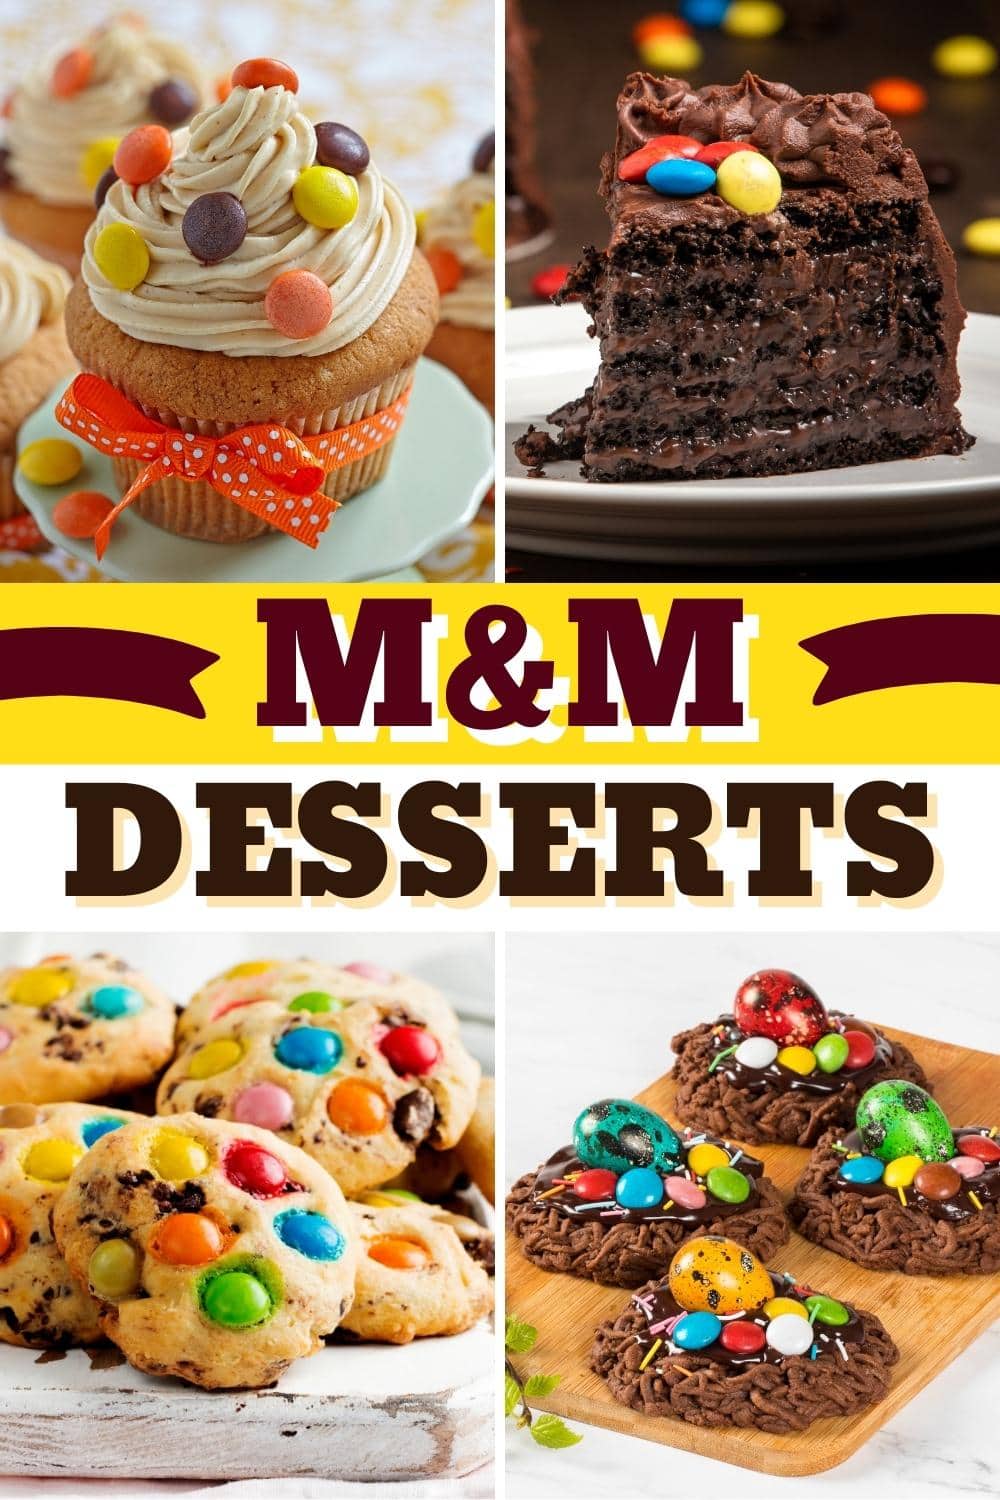 M&M Desserts